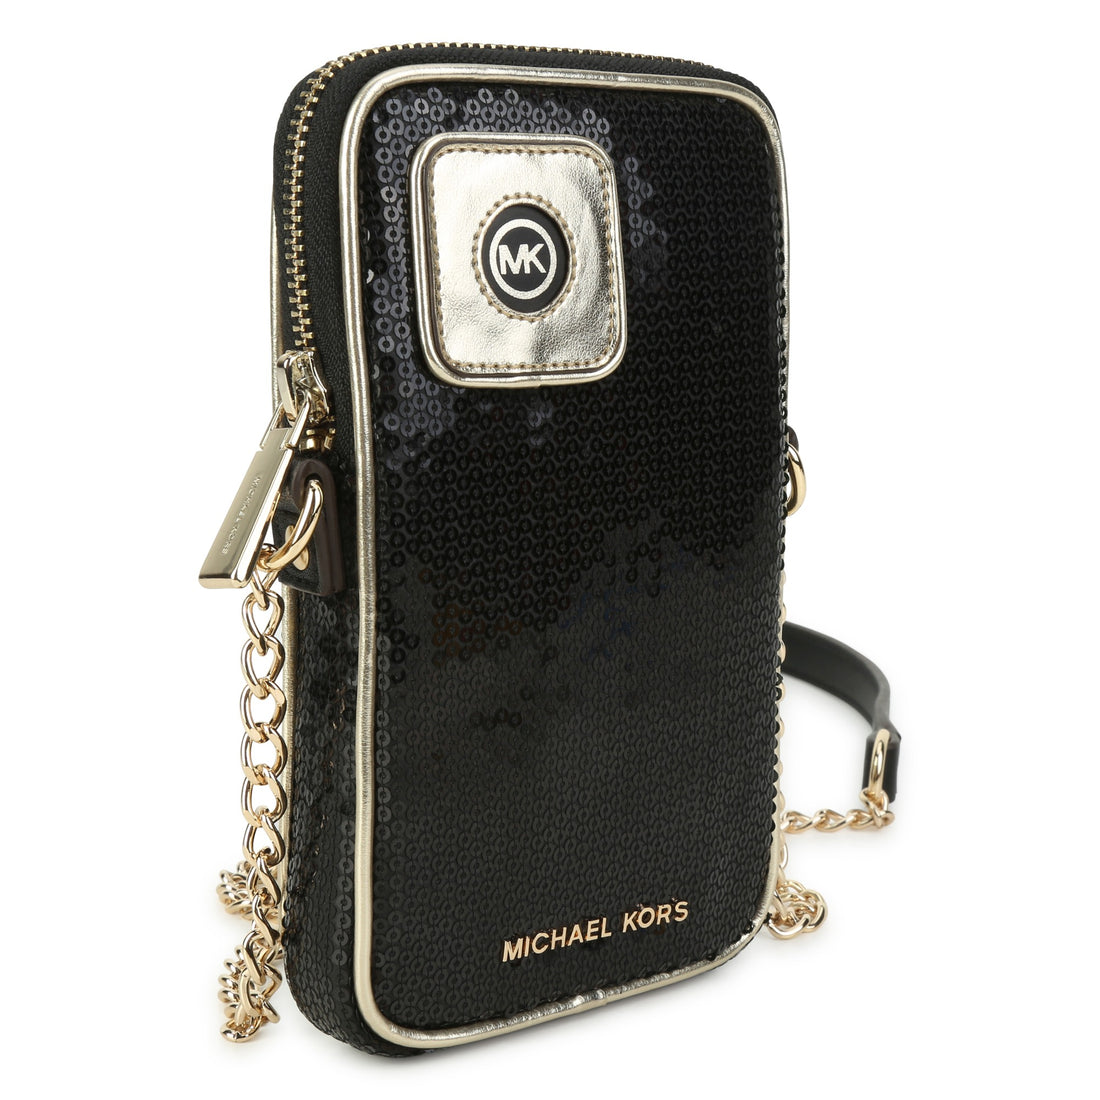 Michael Kors Phone Bag Style: R10190